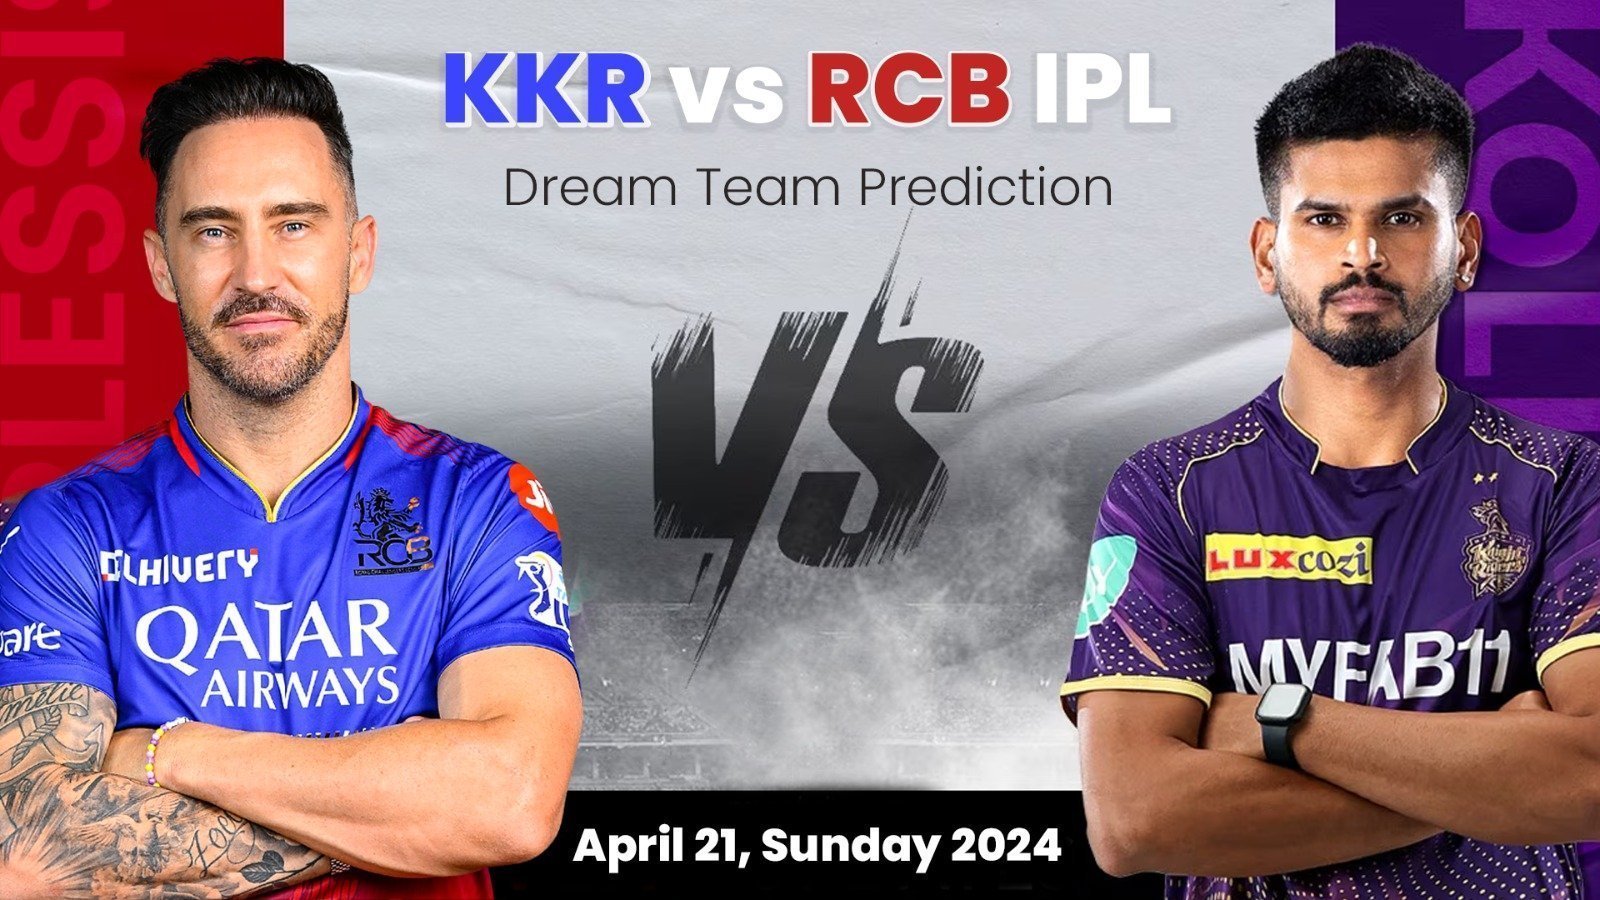 KKR vs RCB IPL Dream11 Prediction 2024 by LetMeAnalyze